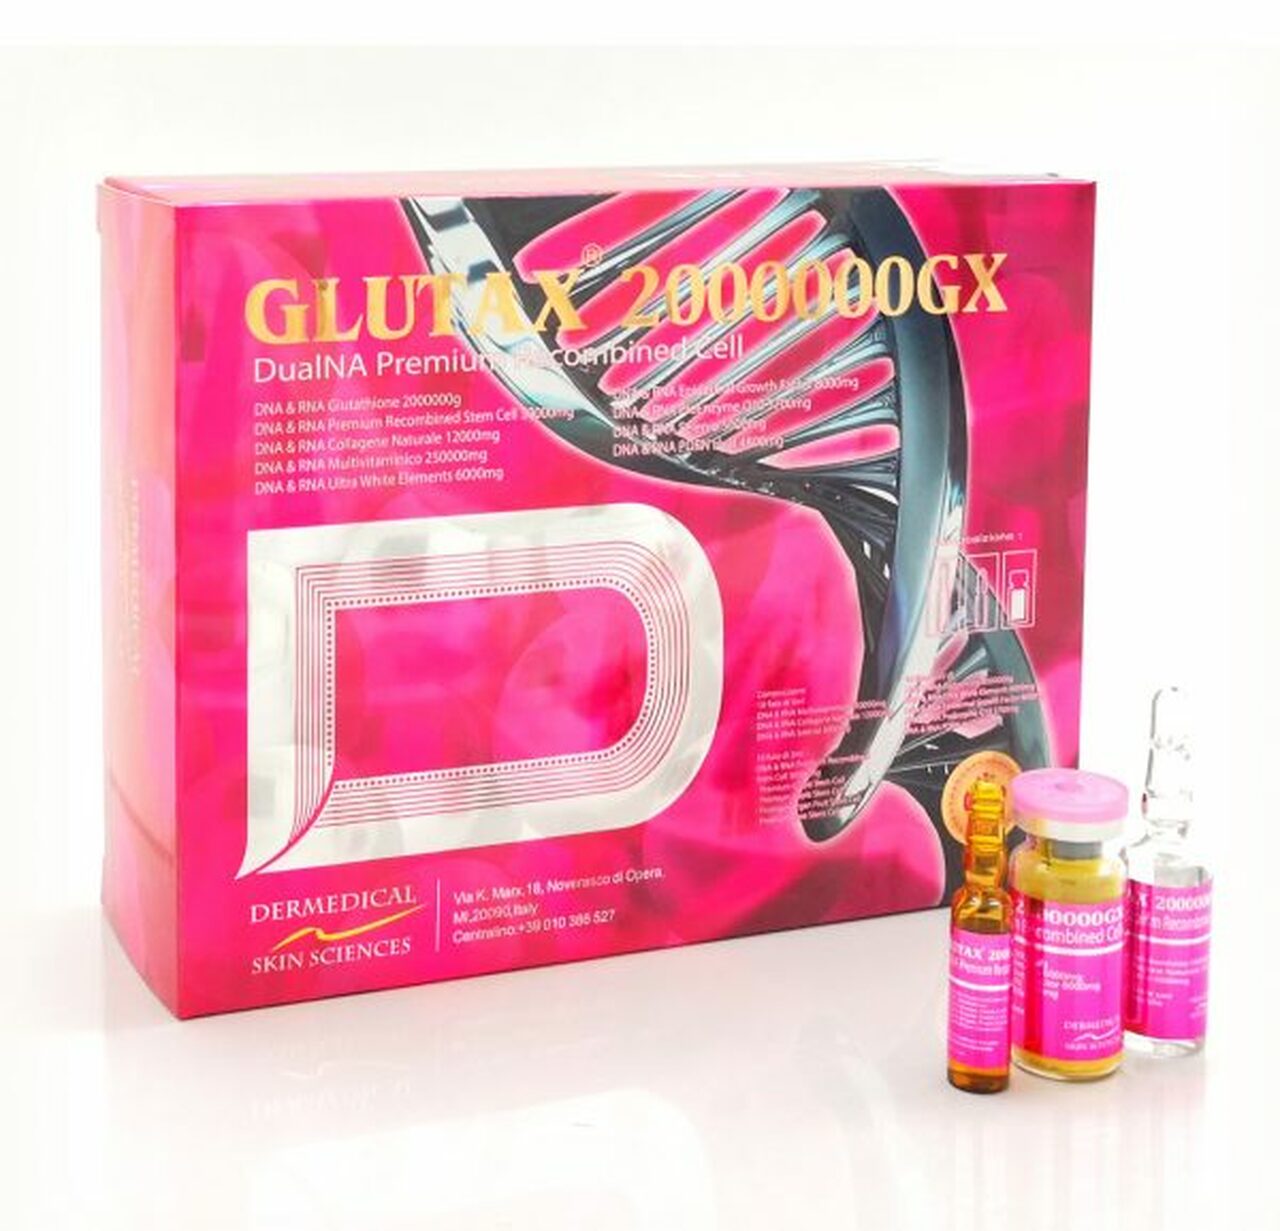 GLUTAX 2000000GX DualNA Premium ReCombined Cell – Skin Whitening Glutathione